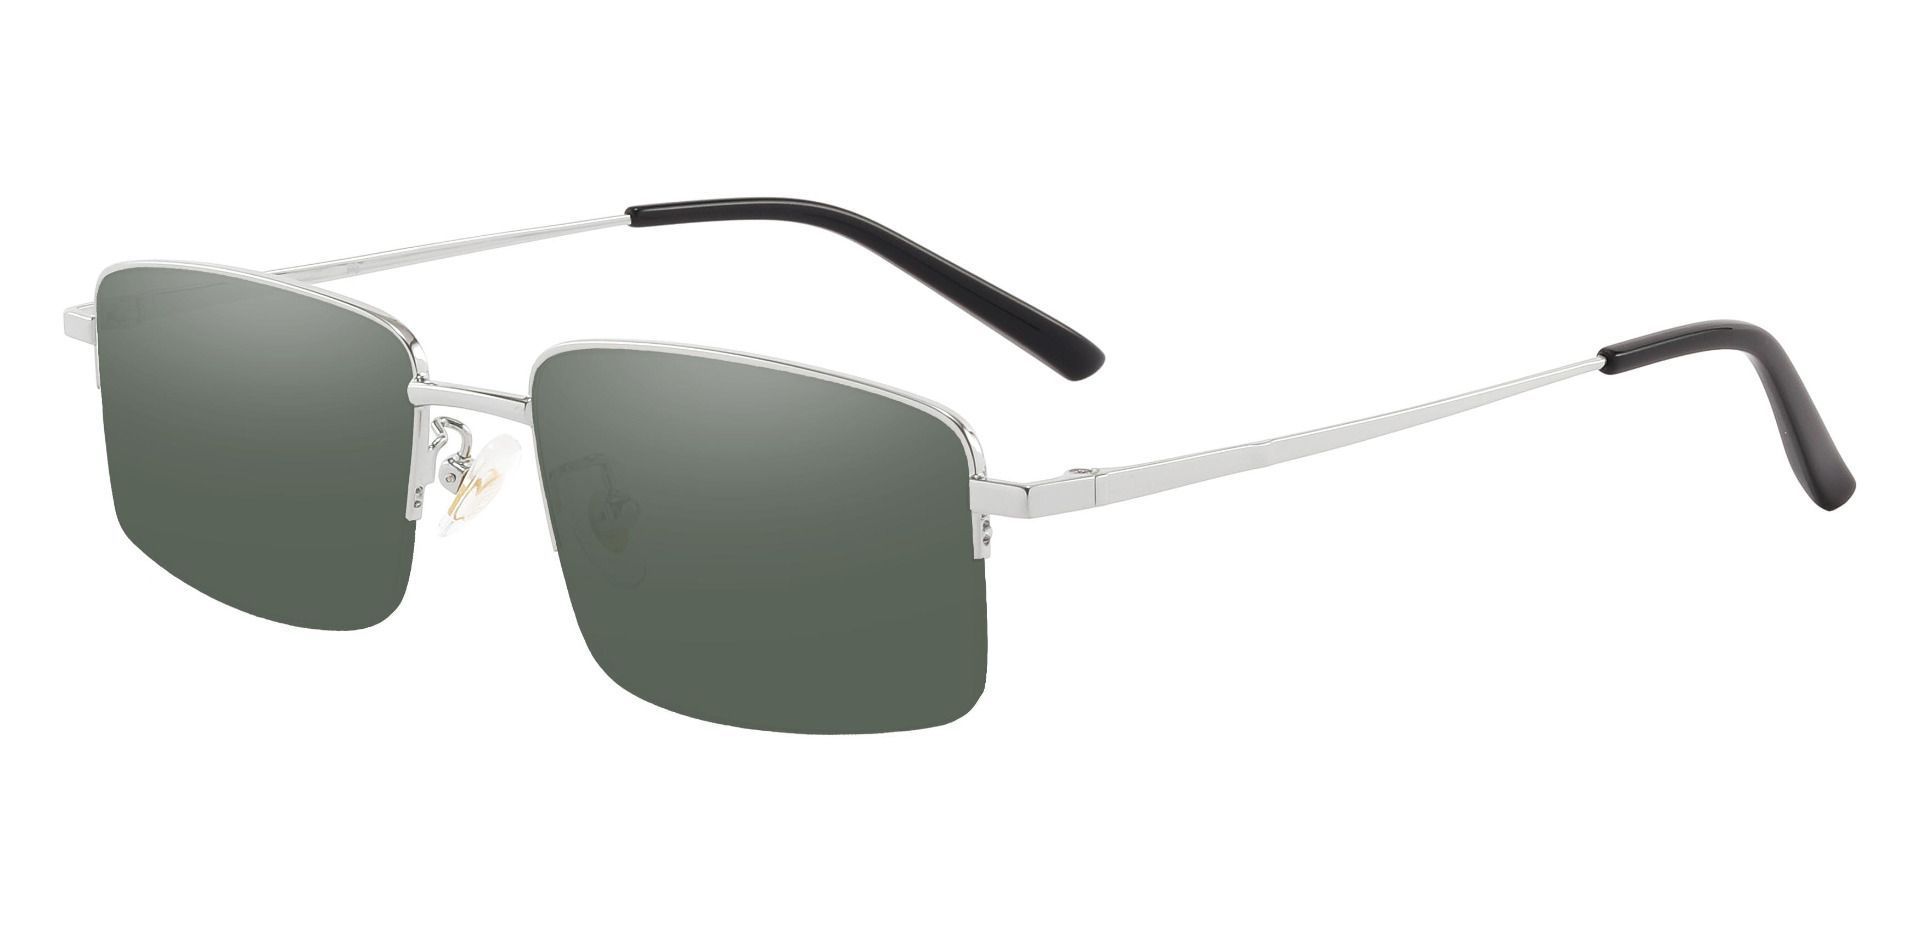 Wayne Rectangle Prescription Sunglasses - Silver Frame With Green Lenses